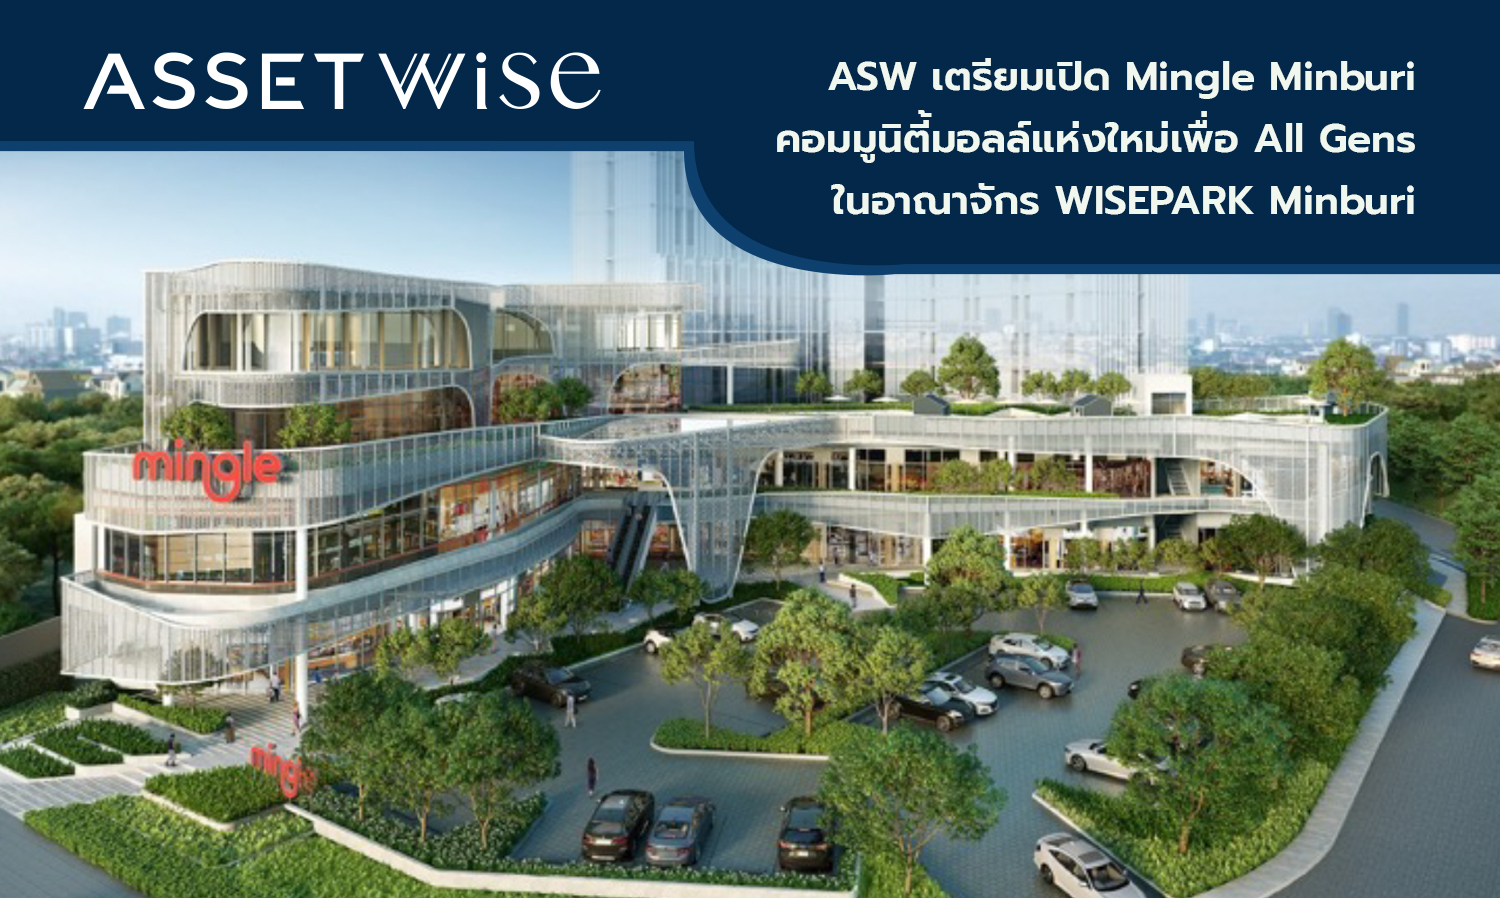 ASW เตรียมเปิด Mingle Minburi คอมมูนิตี้มอลล์แห่งใหม่เพื่อ All Gens ในอาณาจักร WISEPARK Minburi